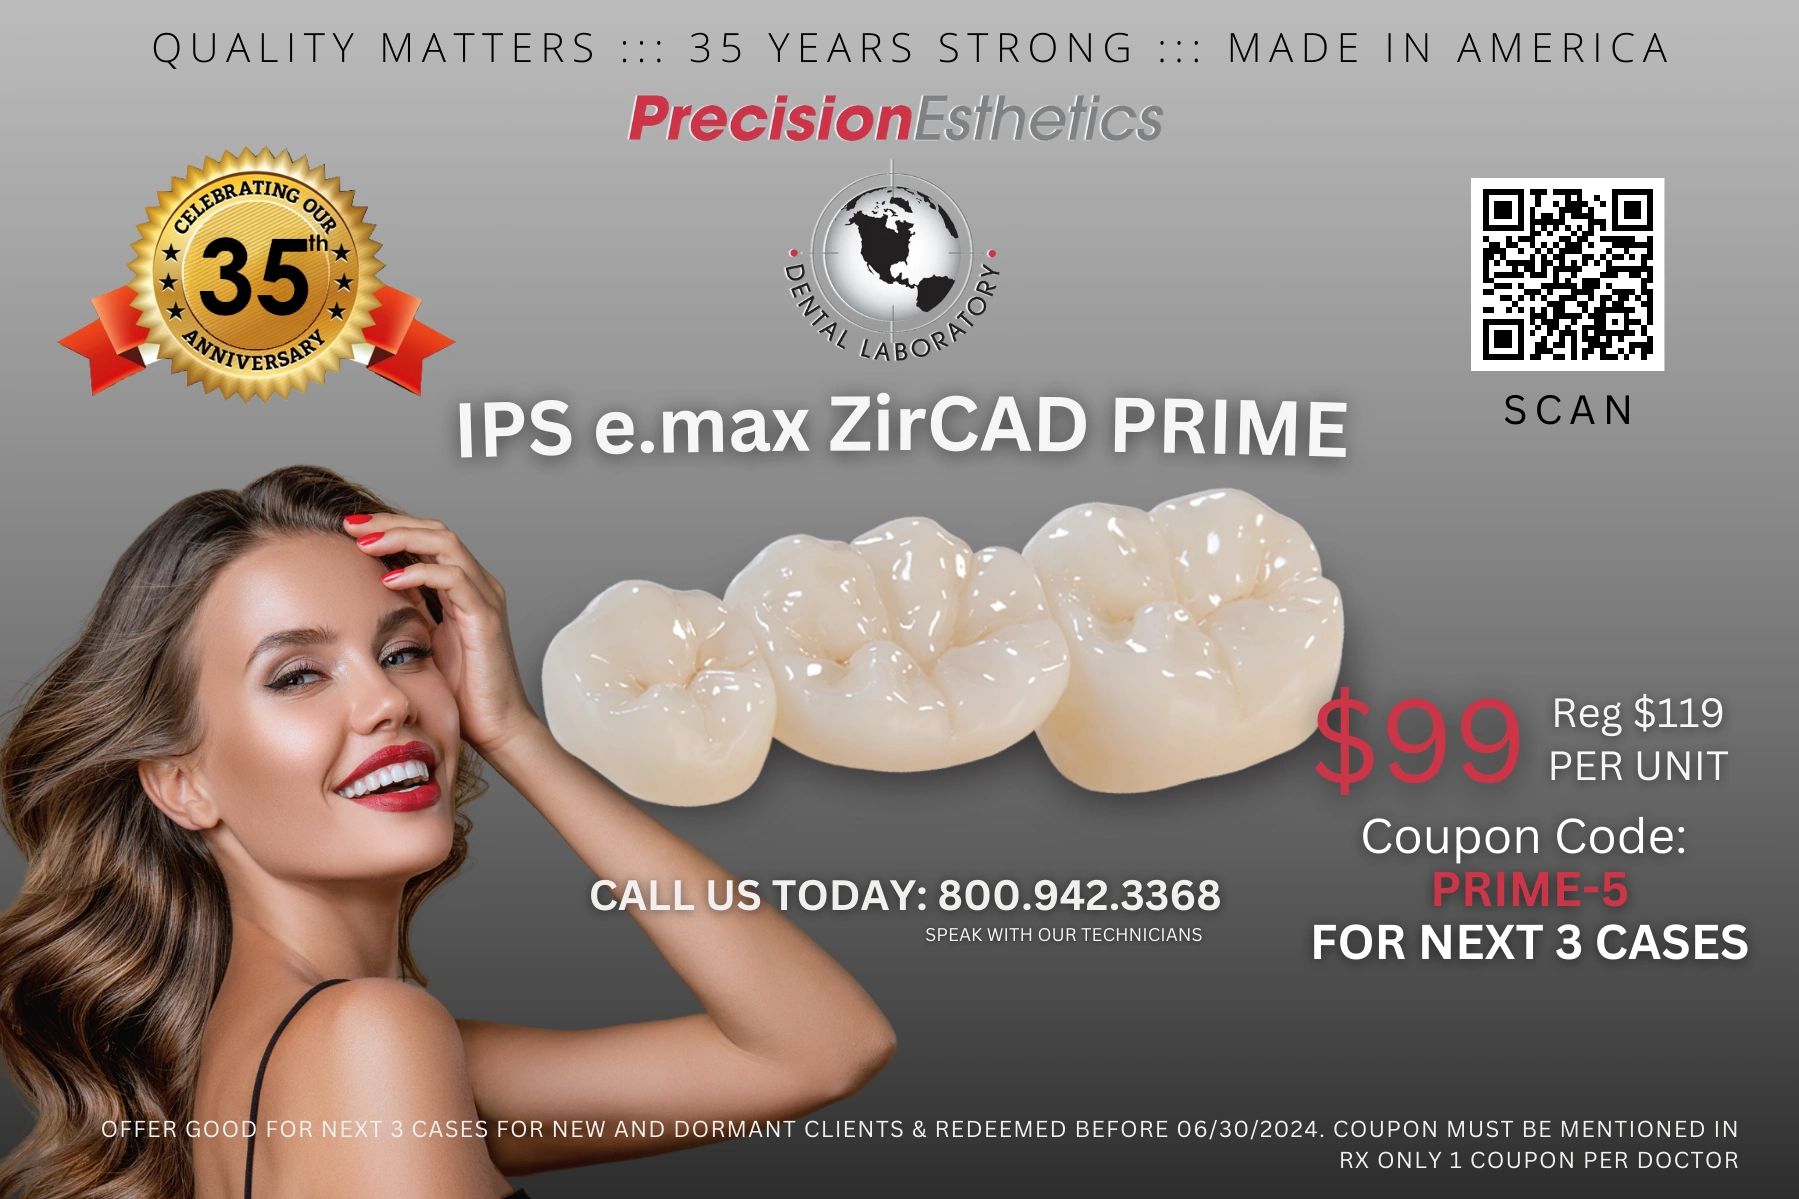 IPS e.max ZirCAD Prime Coupon from our dental laboratory, precision esthetics